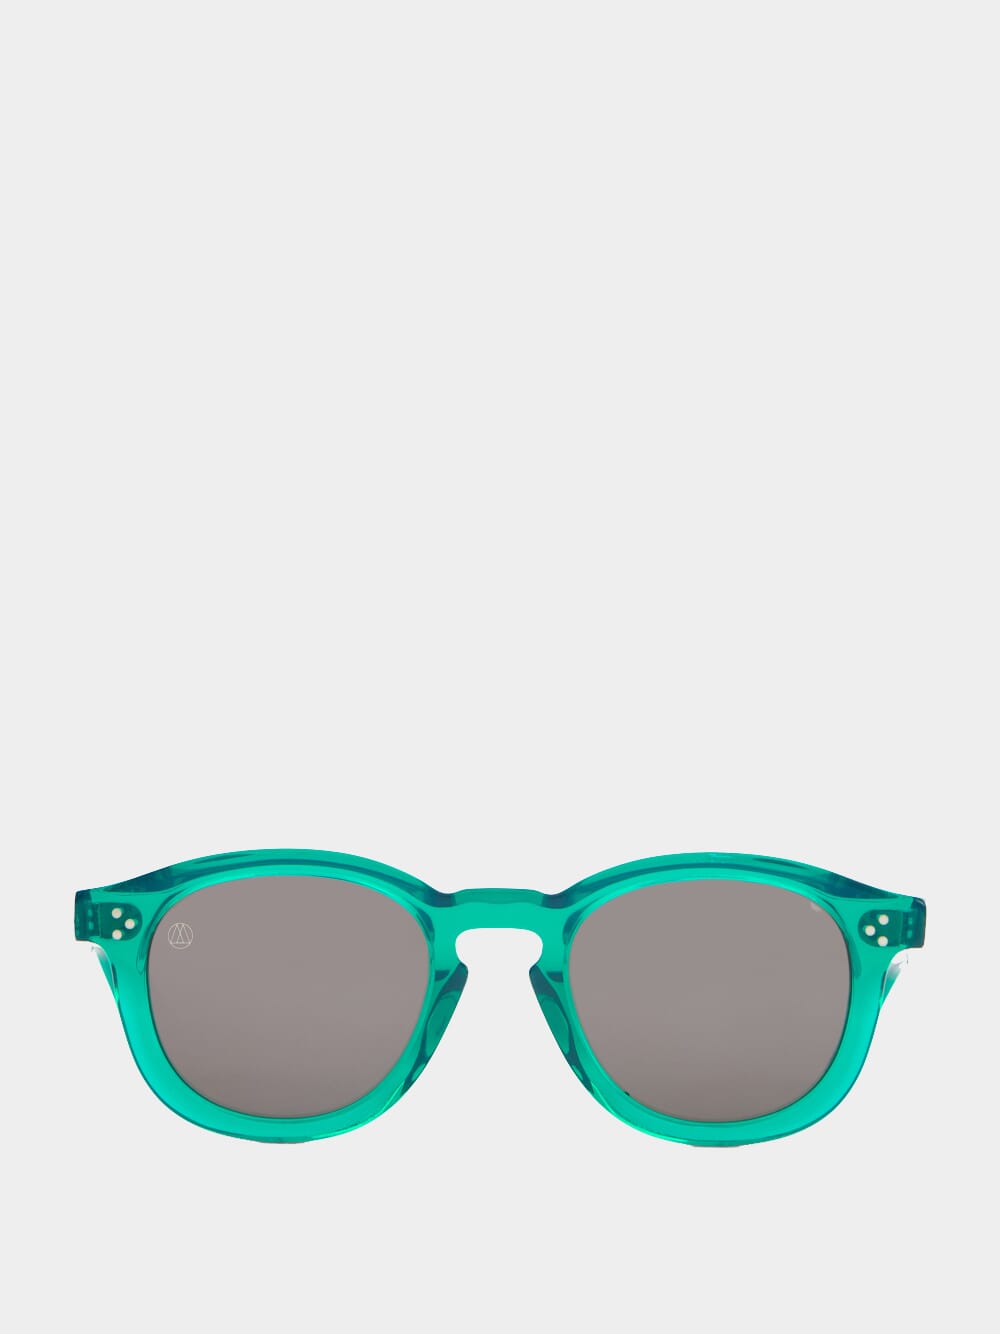 Ombra Giada Sunglasses